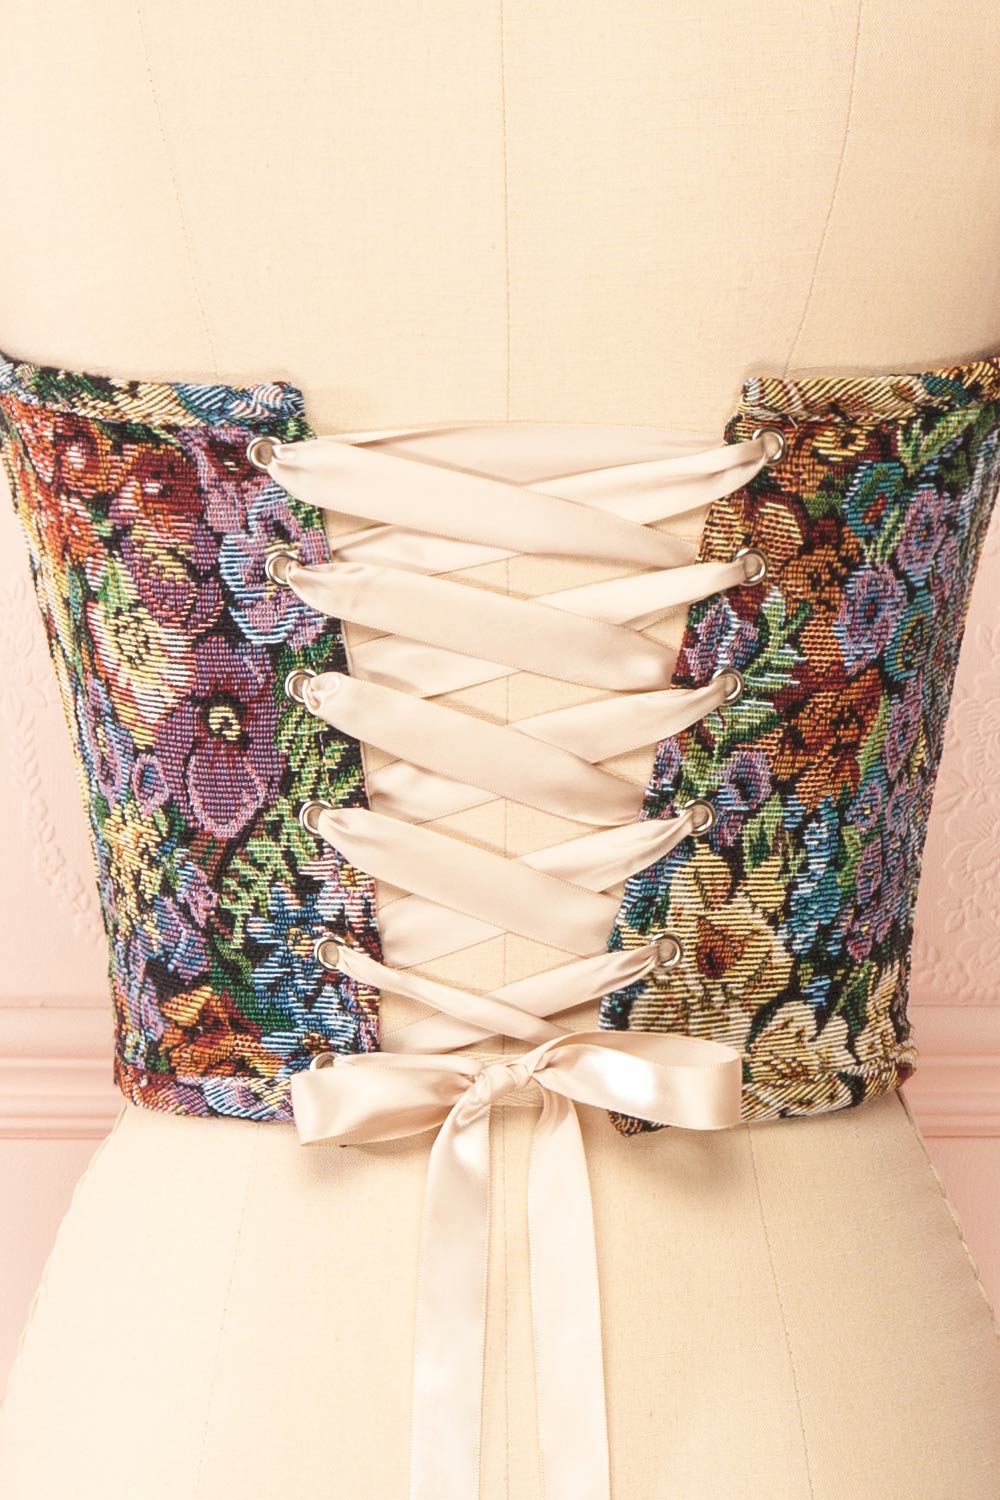 Black floral jacquard corset top - Cover Story